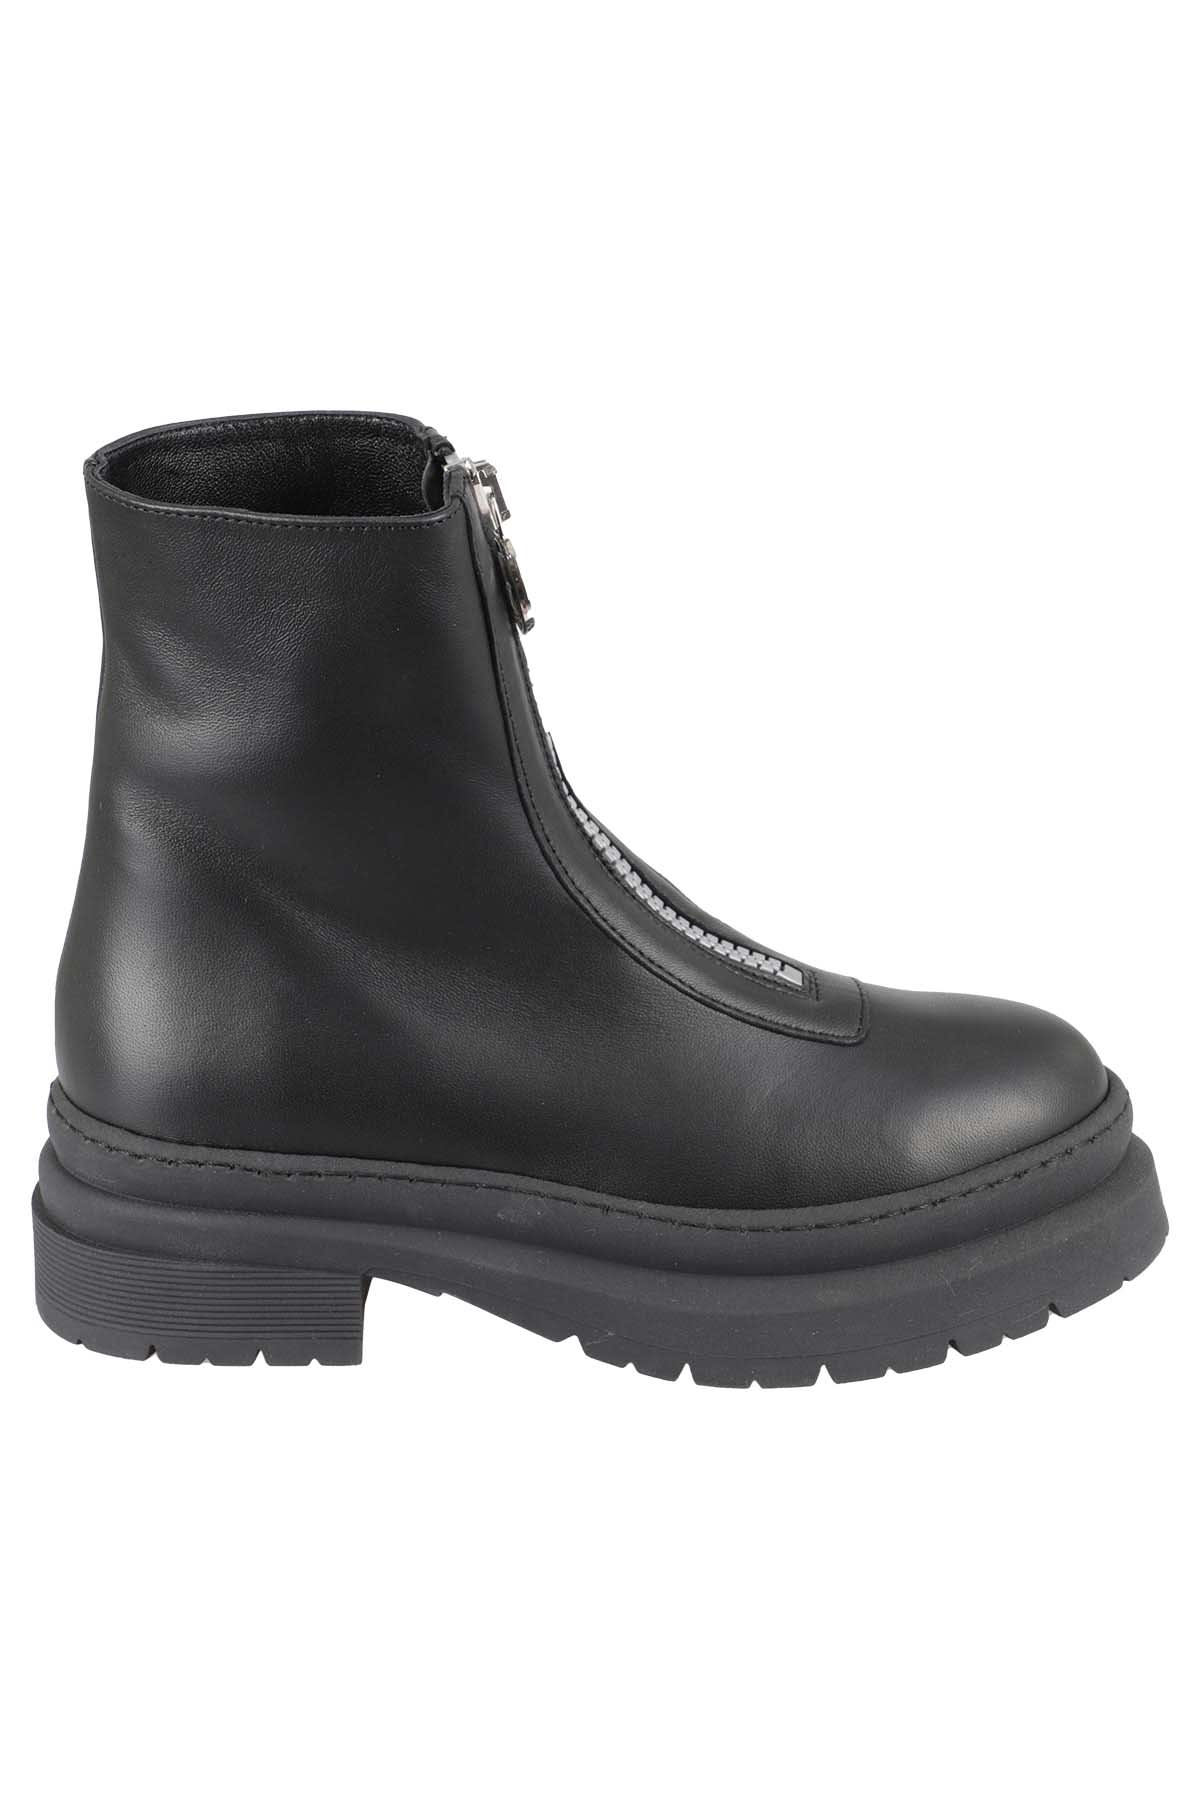 Chiara Ferragni Cf Gummy Boot Leather